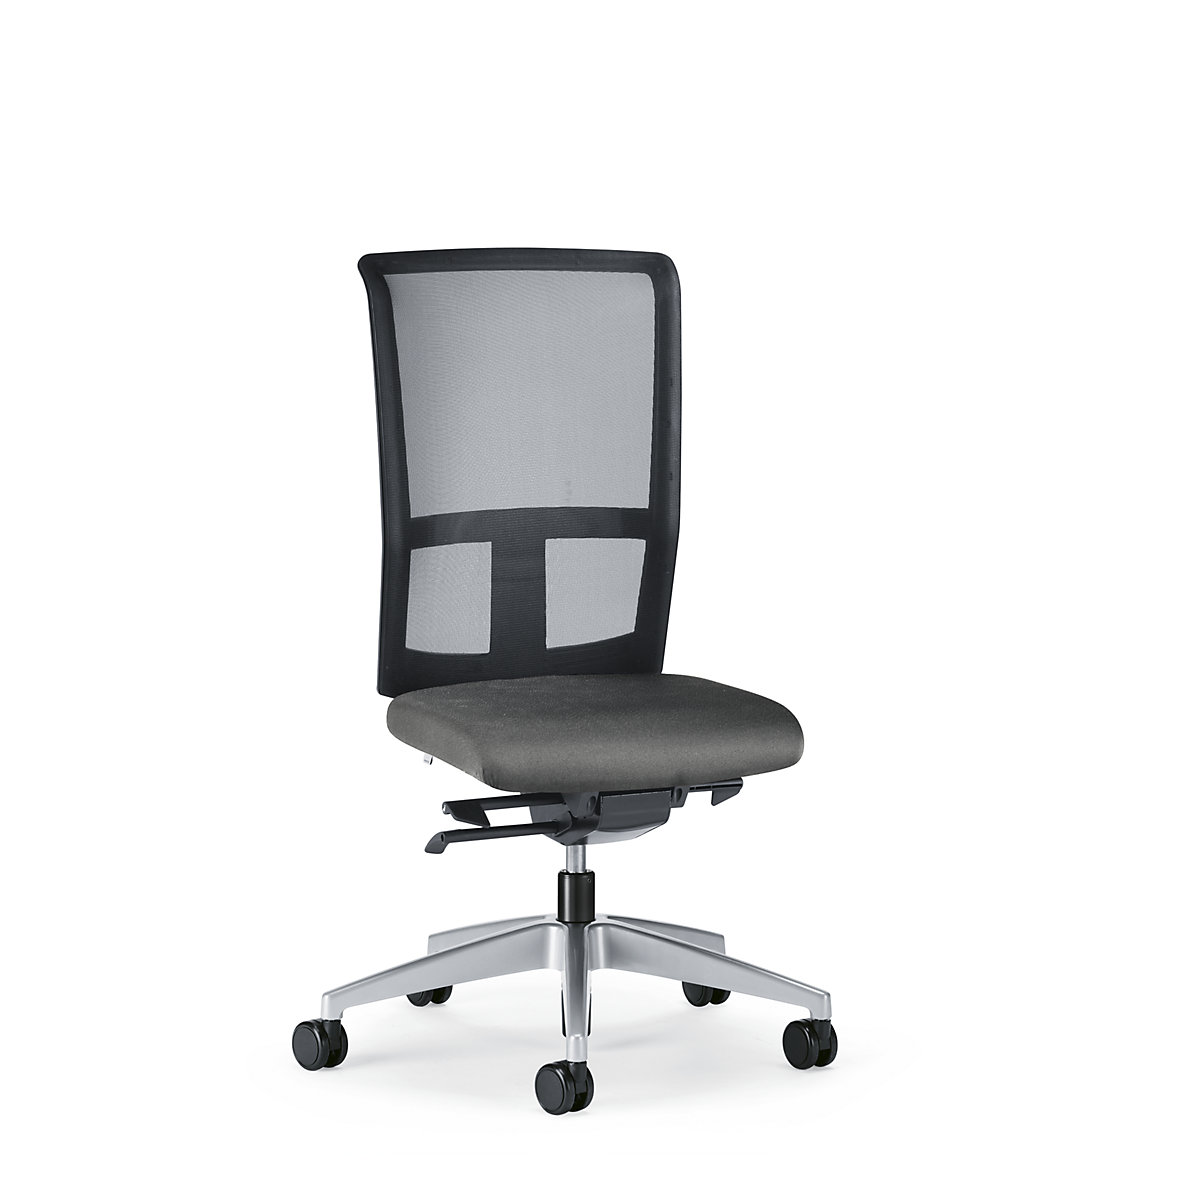 Kancelárska otočná stolička GOAL AIR, výška operadla 545 mm – interstuhl, podstavec briliantová strieborná, s mäkkými kolieskami, oceľová šedá, hĺbka sedadla 410 mm-6